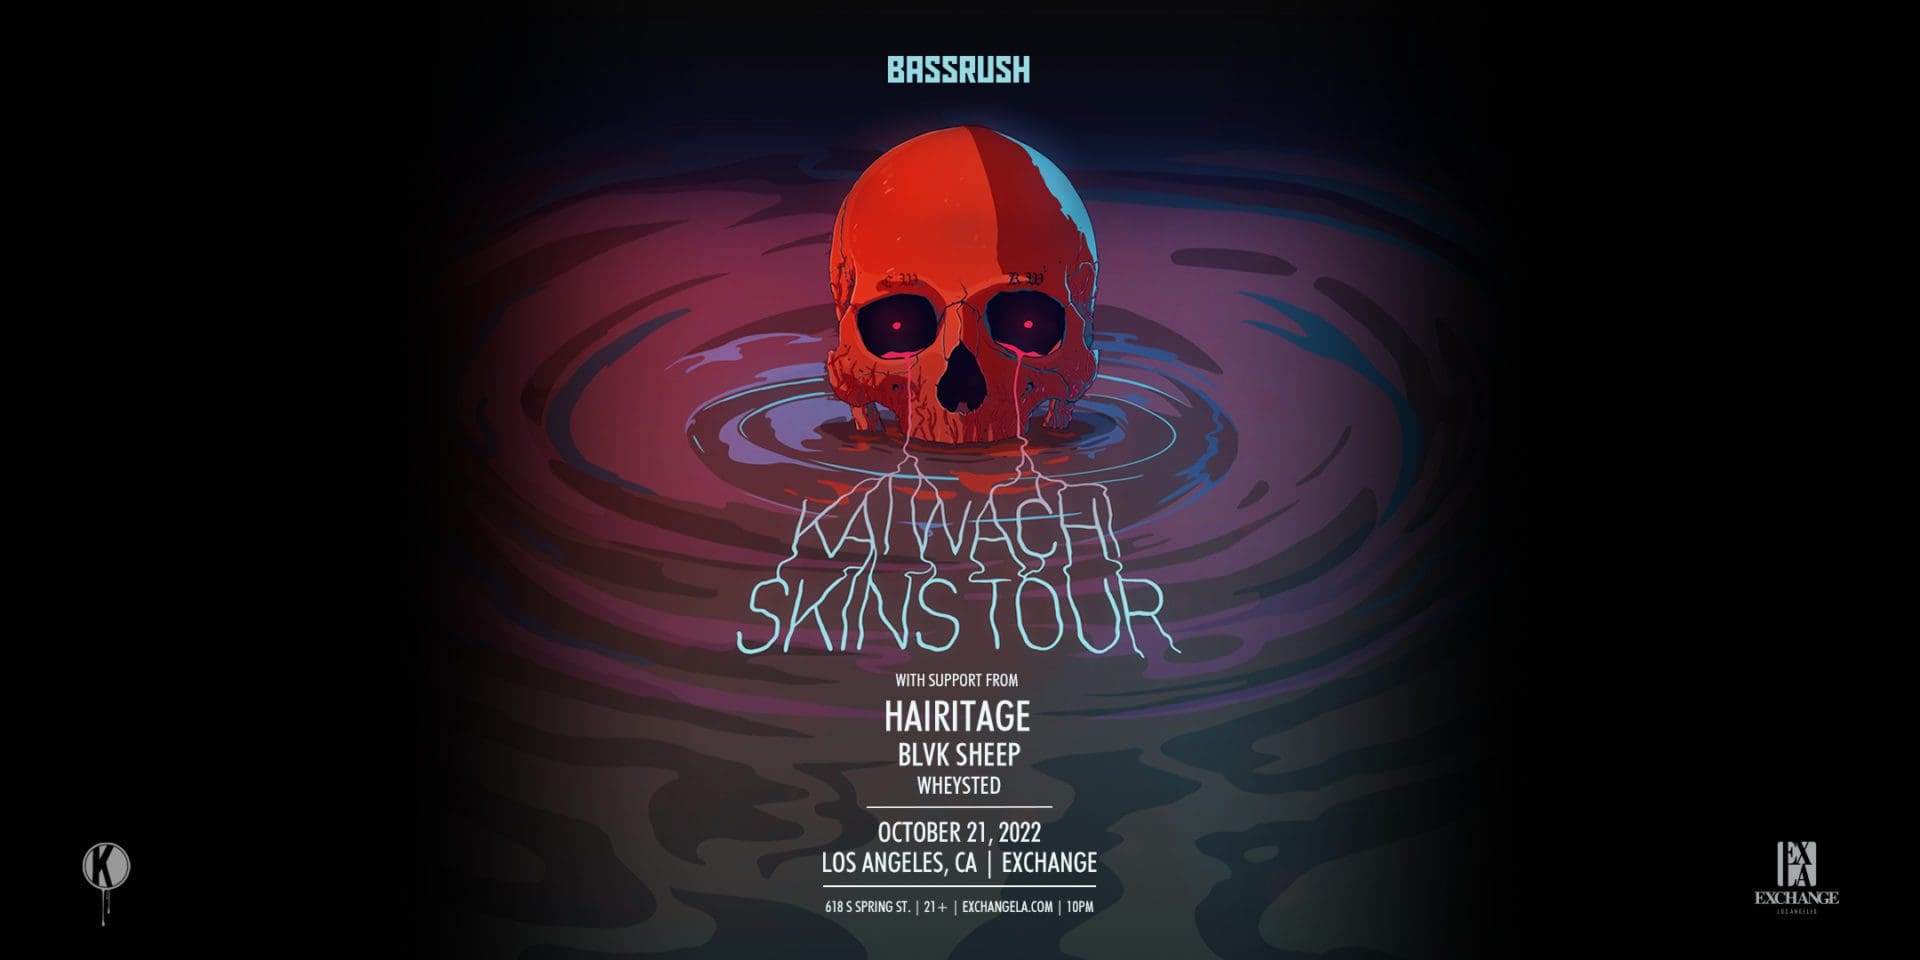 kai wachi skins tour openers